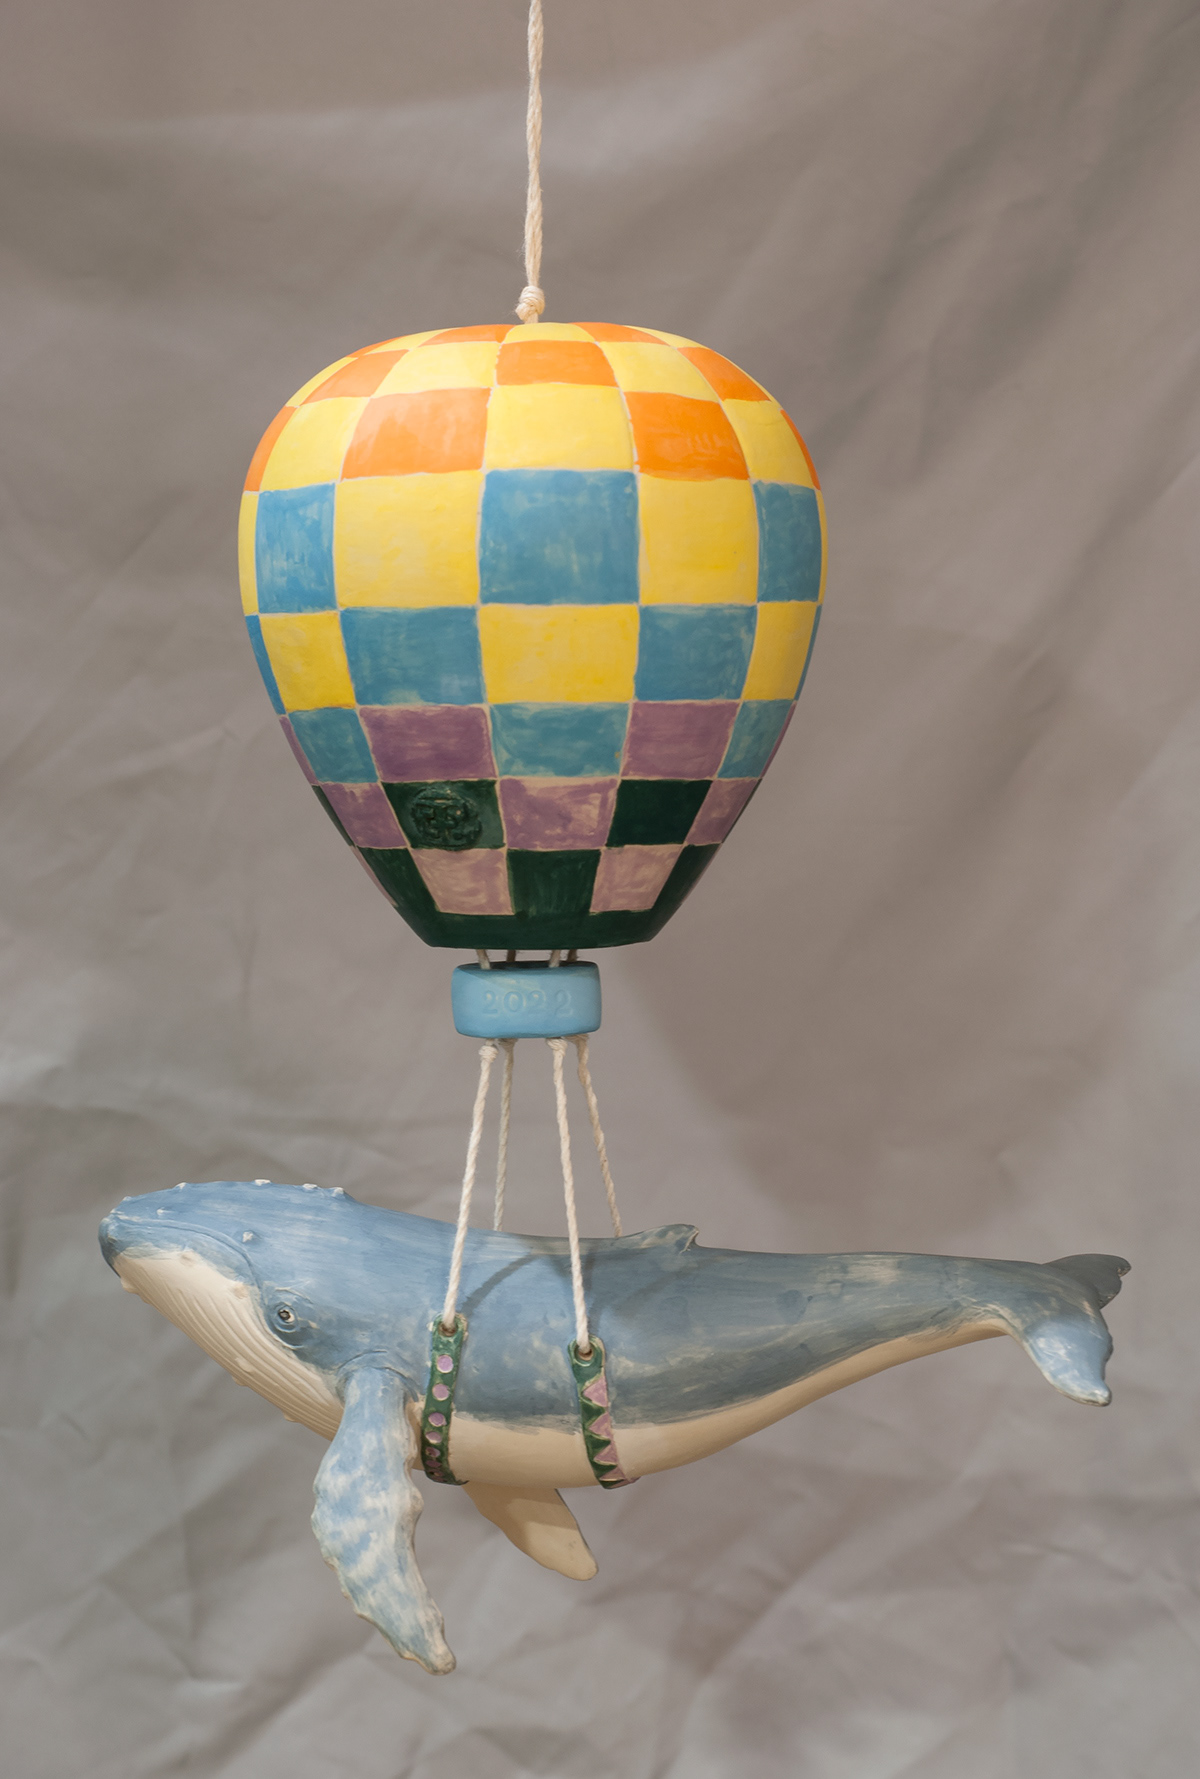 Airborne balloon ceramic clay handmade hanging sculpture Whale